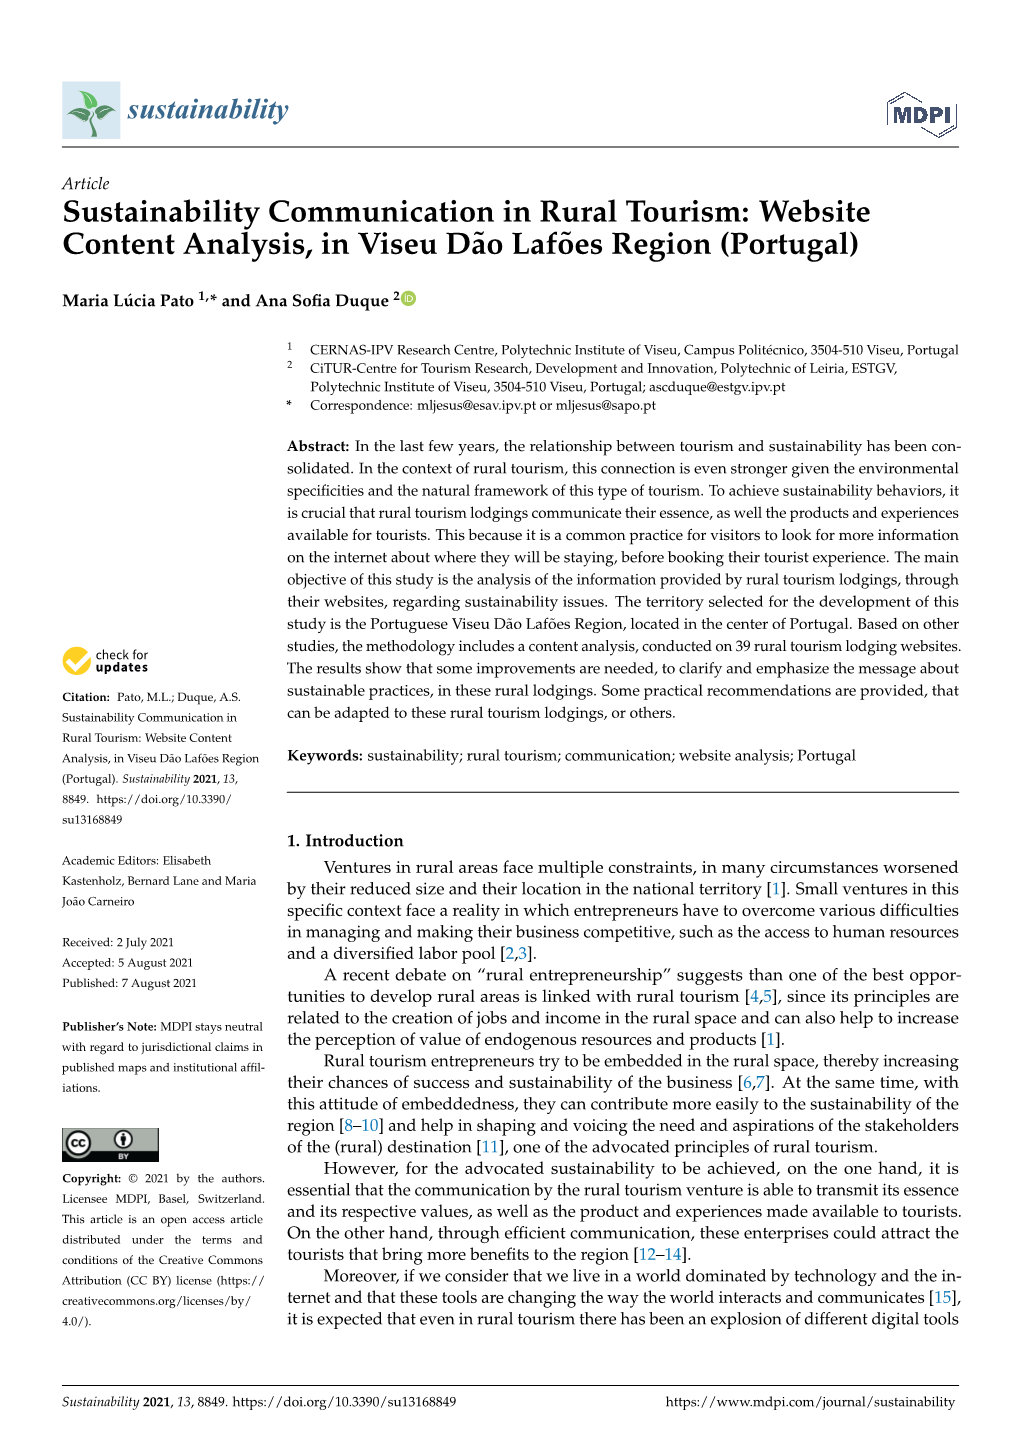 Sustainability Communication in Rural Tourism: Website Content Analysis, in Viseu Dão Lafões Region (Portugal)